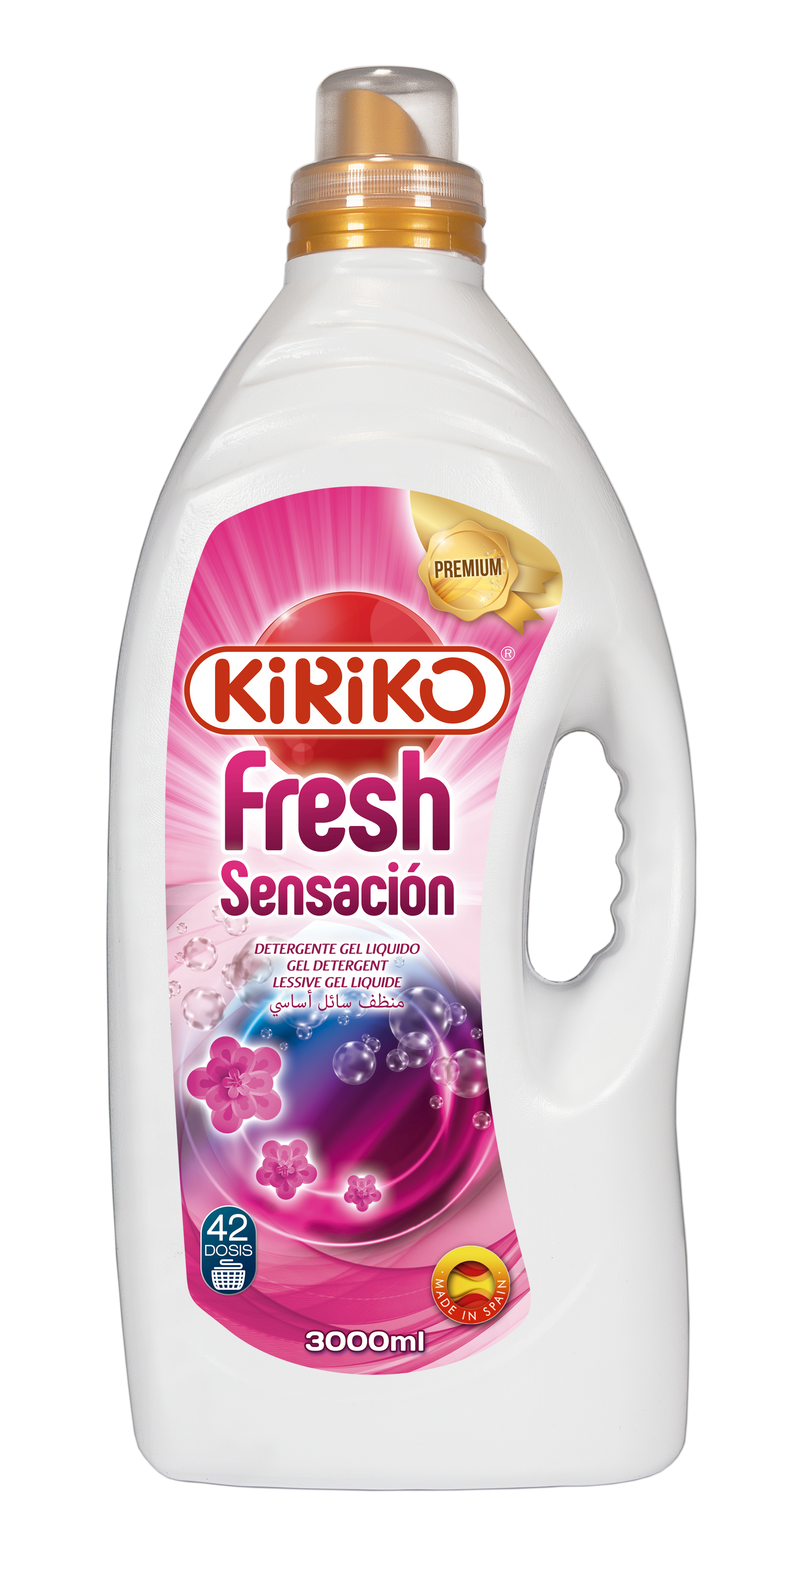 Kiriko Sensations 3L washing Detergent